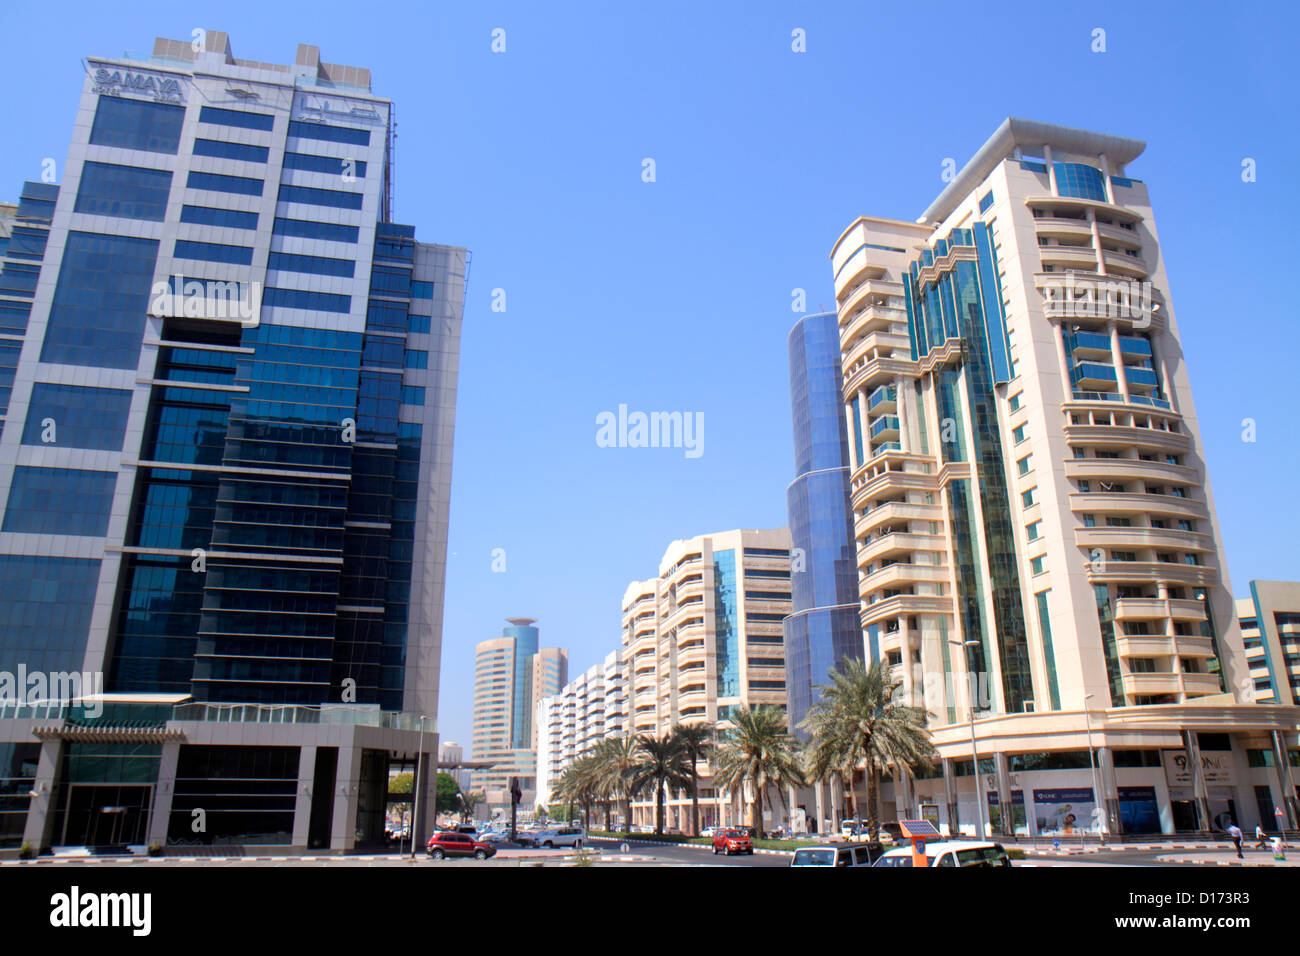 Dubai UAE,United Arab Emirates,Deira,Al Rigga,4th Street,street scene,buildings,city skyline,office,Samaya,hotel,hotel,hotels,hospitality,UAE121011028 Stock Photo